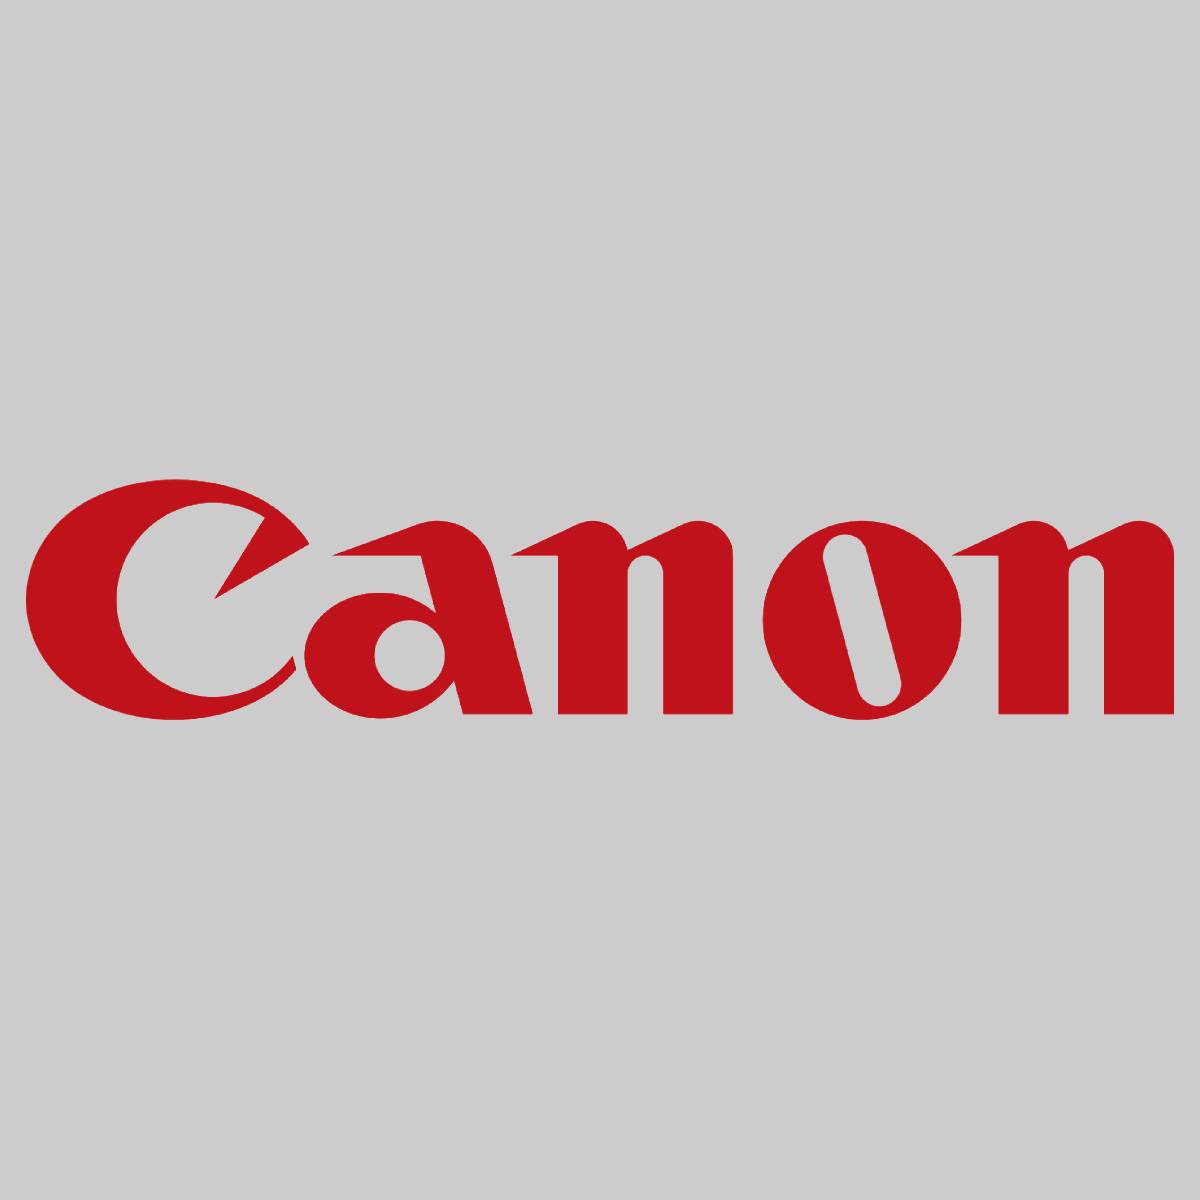 "Toner noir d'origine CANON C-EXV43 2788B002 pour imageRUNNER ADVANCE 400 500